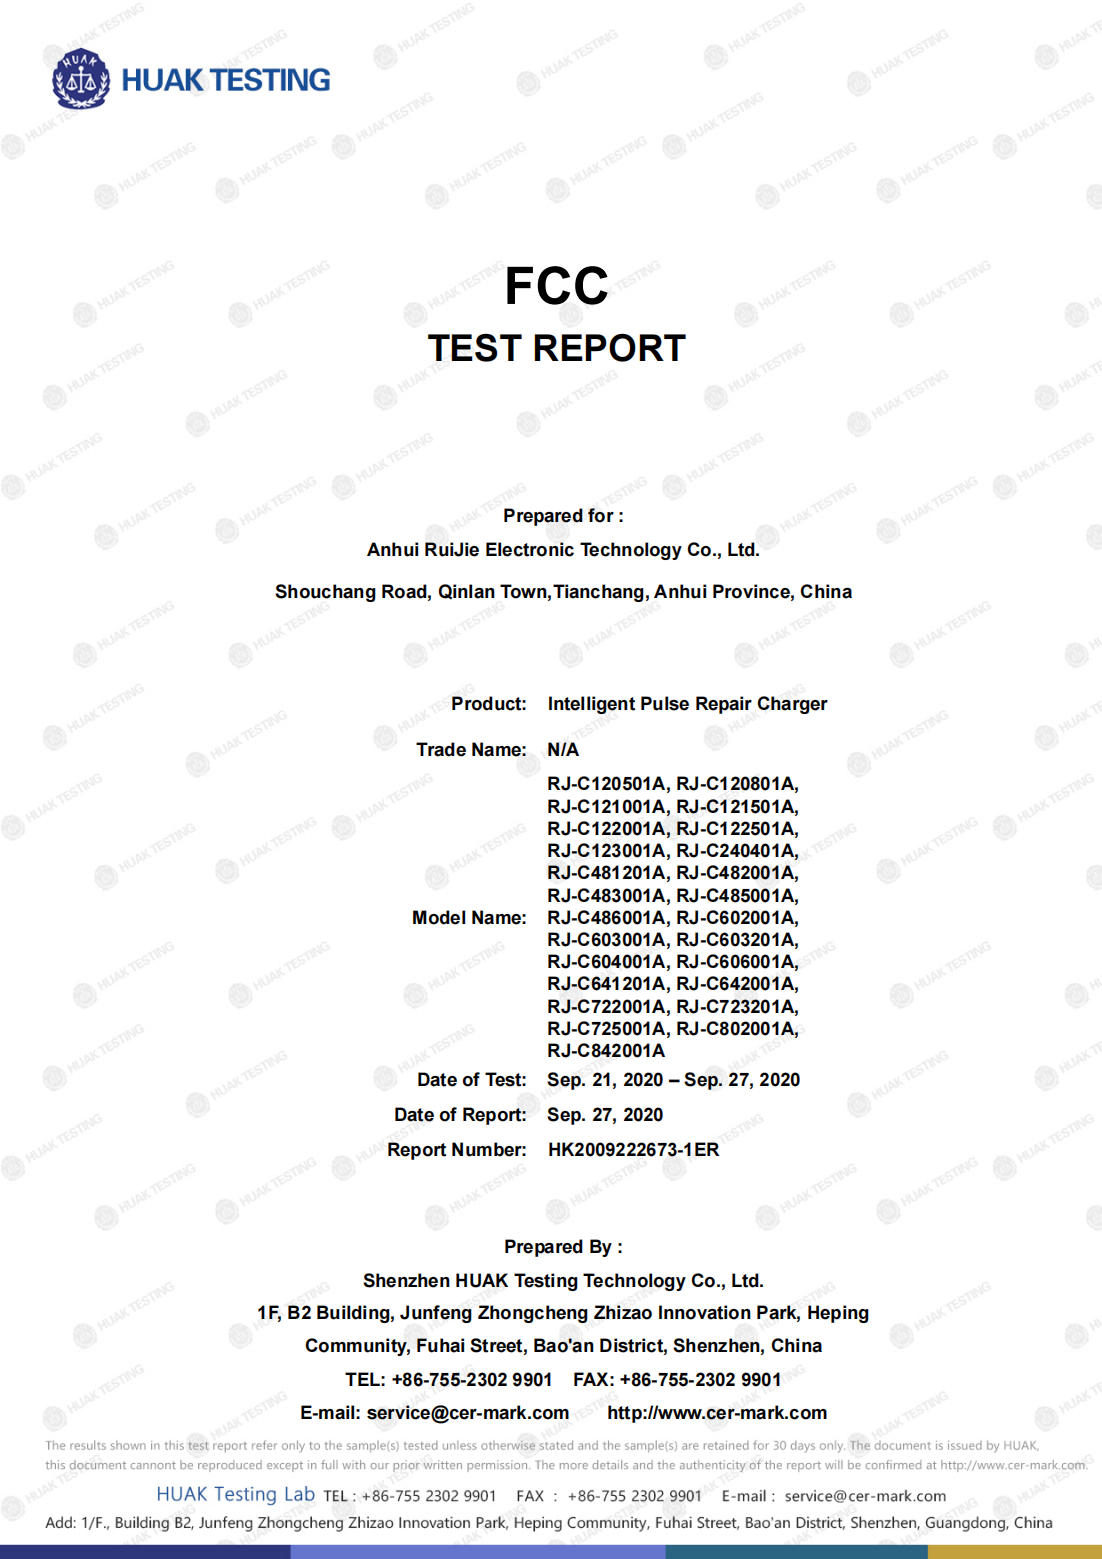 RJ-C120501A-FCC Test Report(1)_00.png